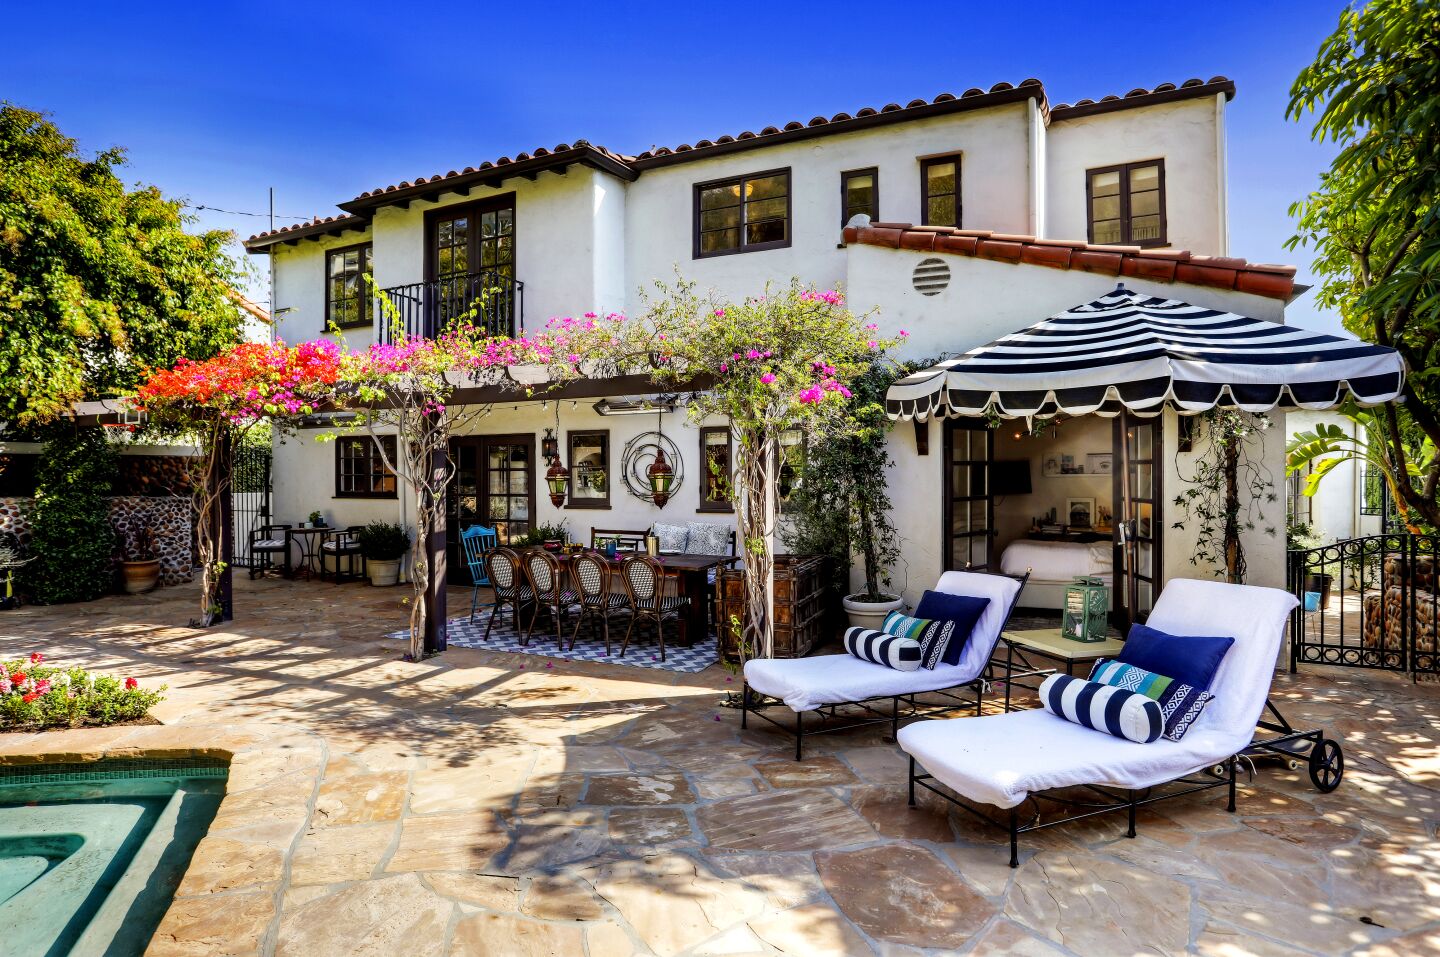 "Schitt's Creek" actor Dan Levy has bought a Spanish-style home in Los Feliz for $4.13 million.